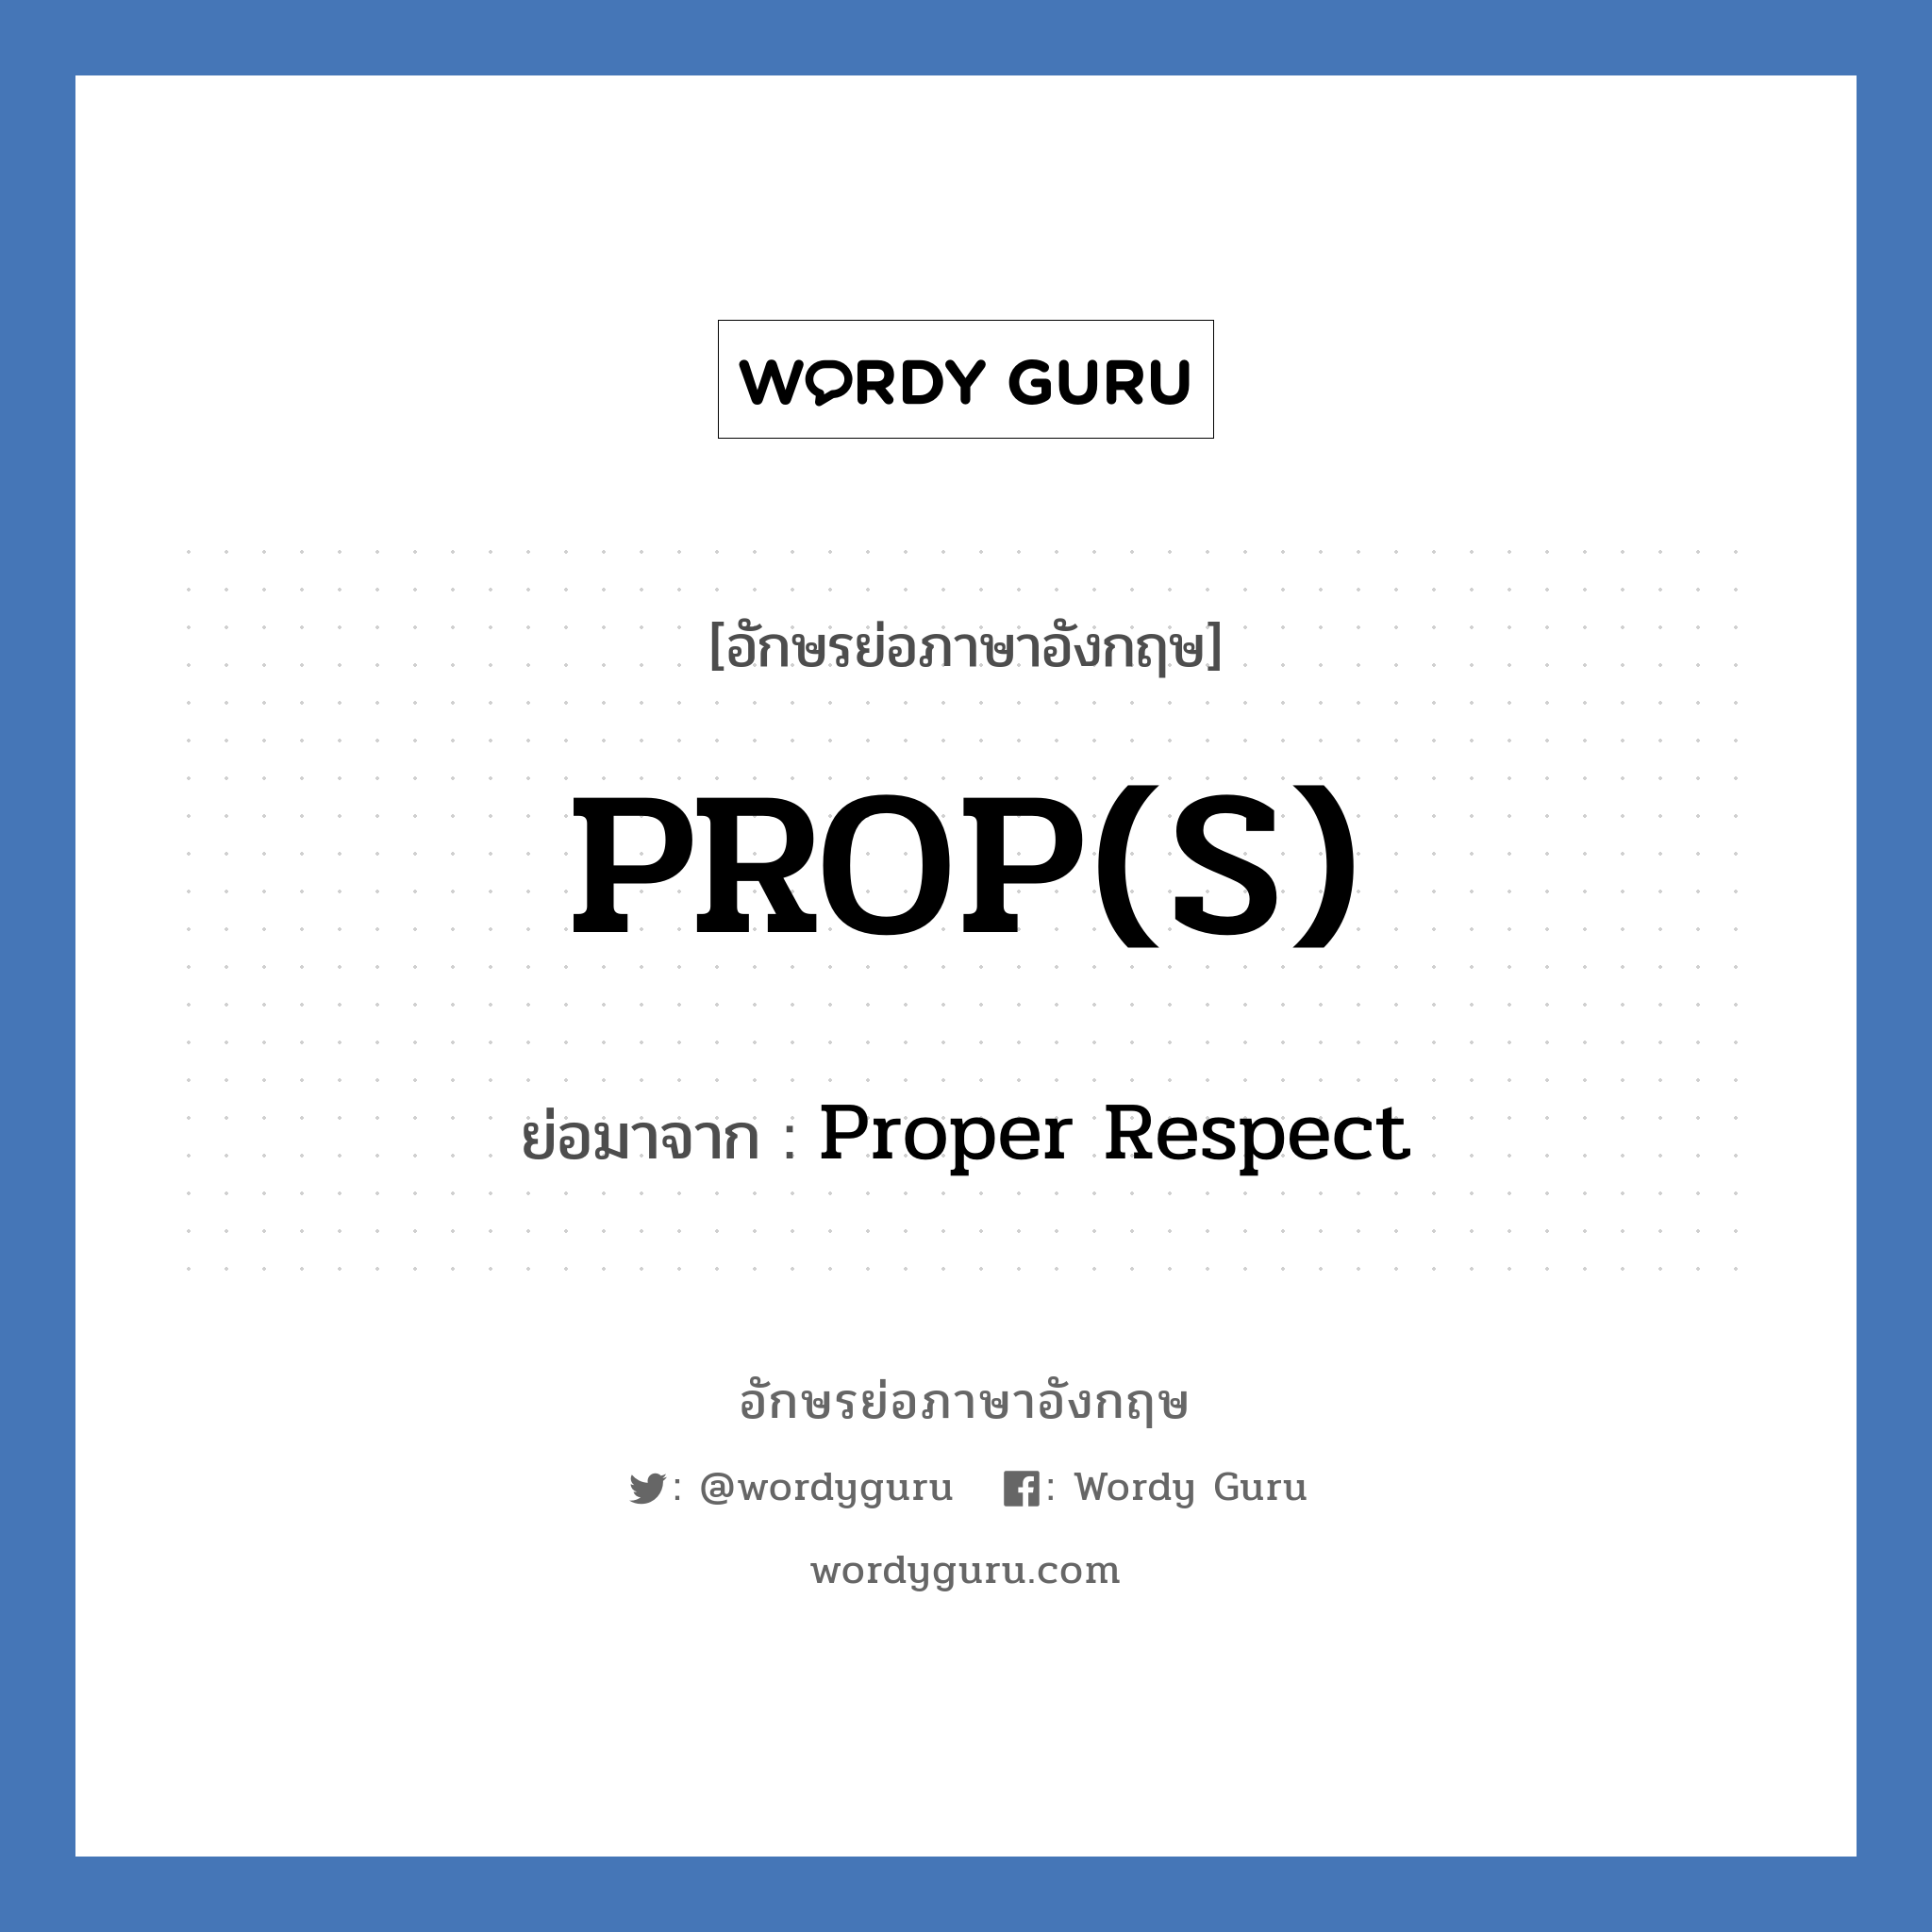 Proper Respect คำย่อคือ? แปลว่า?, อักษรย่อภาษาอังกฤษ Proper Respect ย่อมาจาก PROP(S)